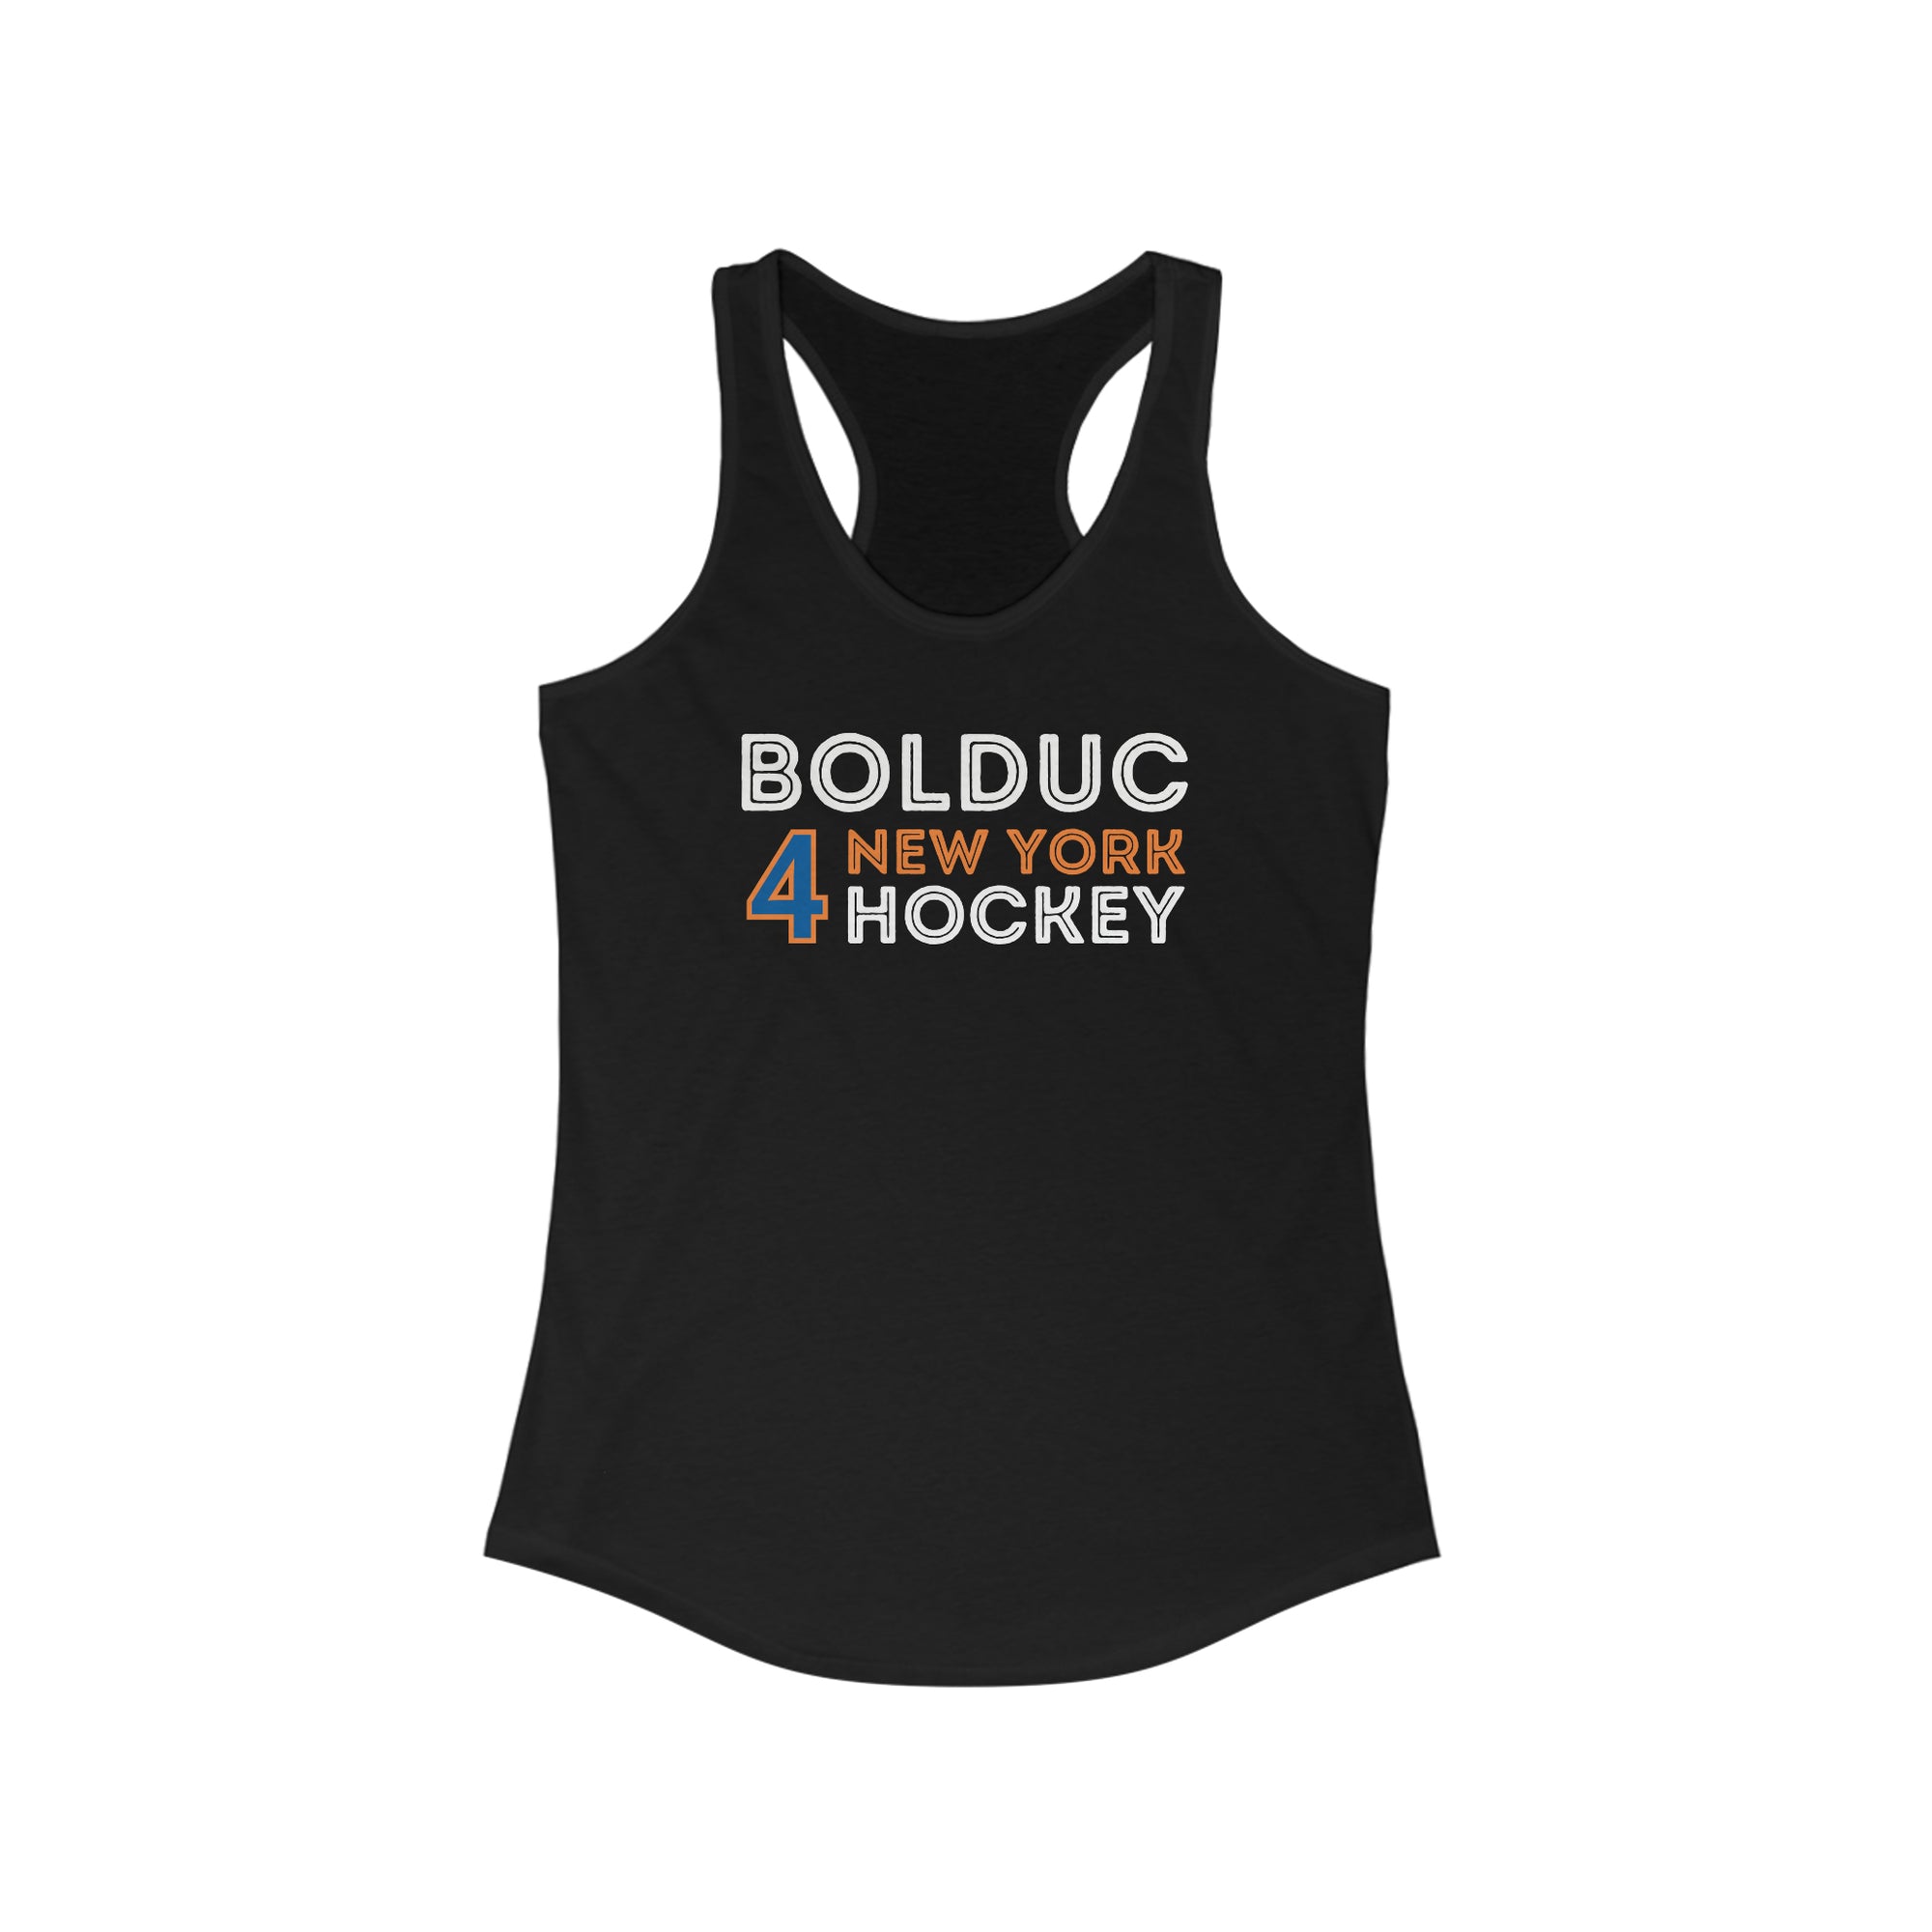 Bolduc 4 New York Hockey Grafitti Wall Design Women's Ideal Racerback Tank Top